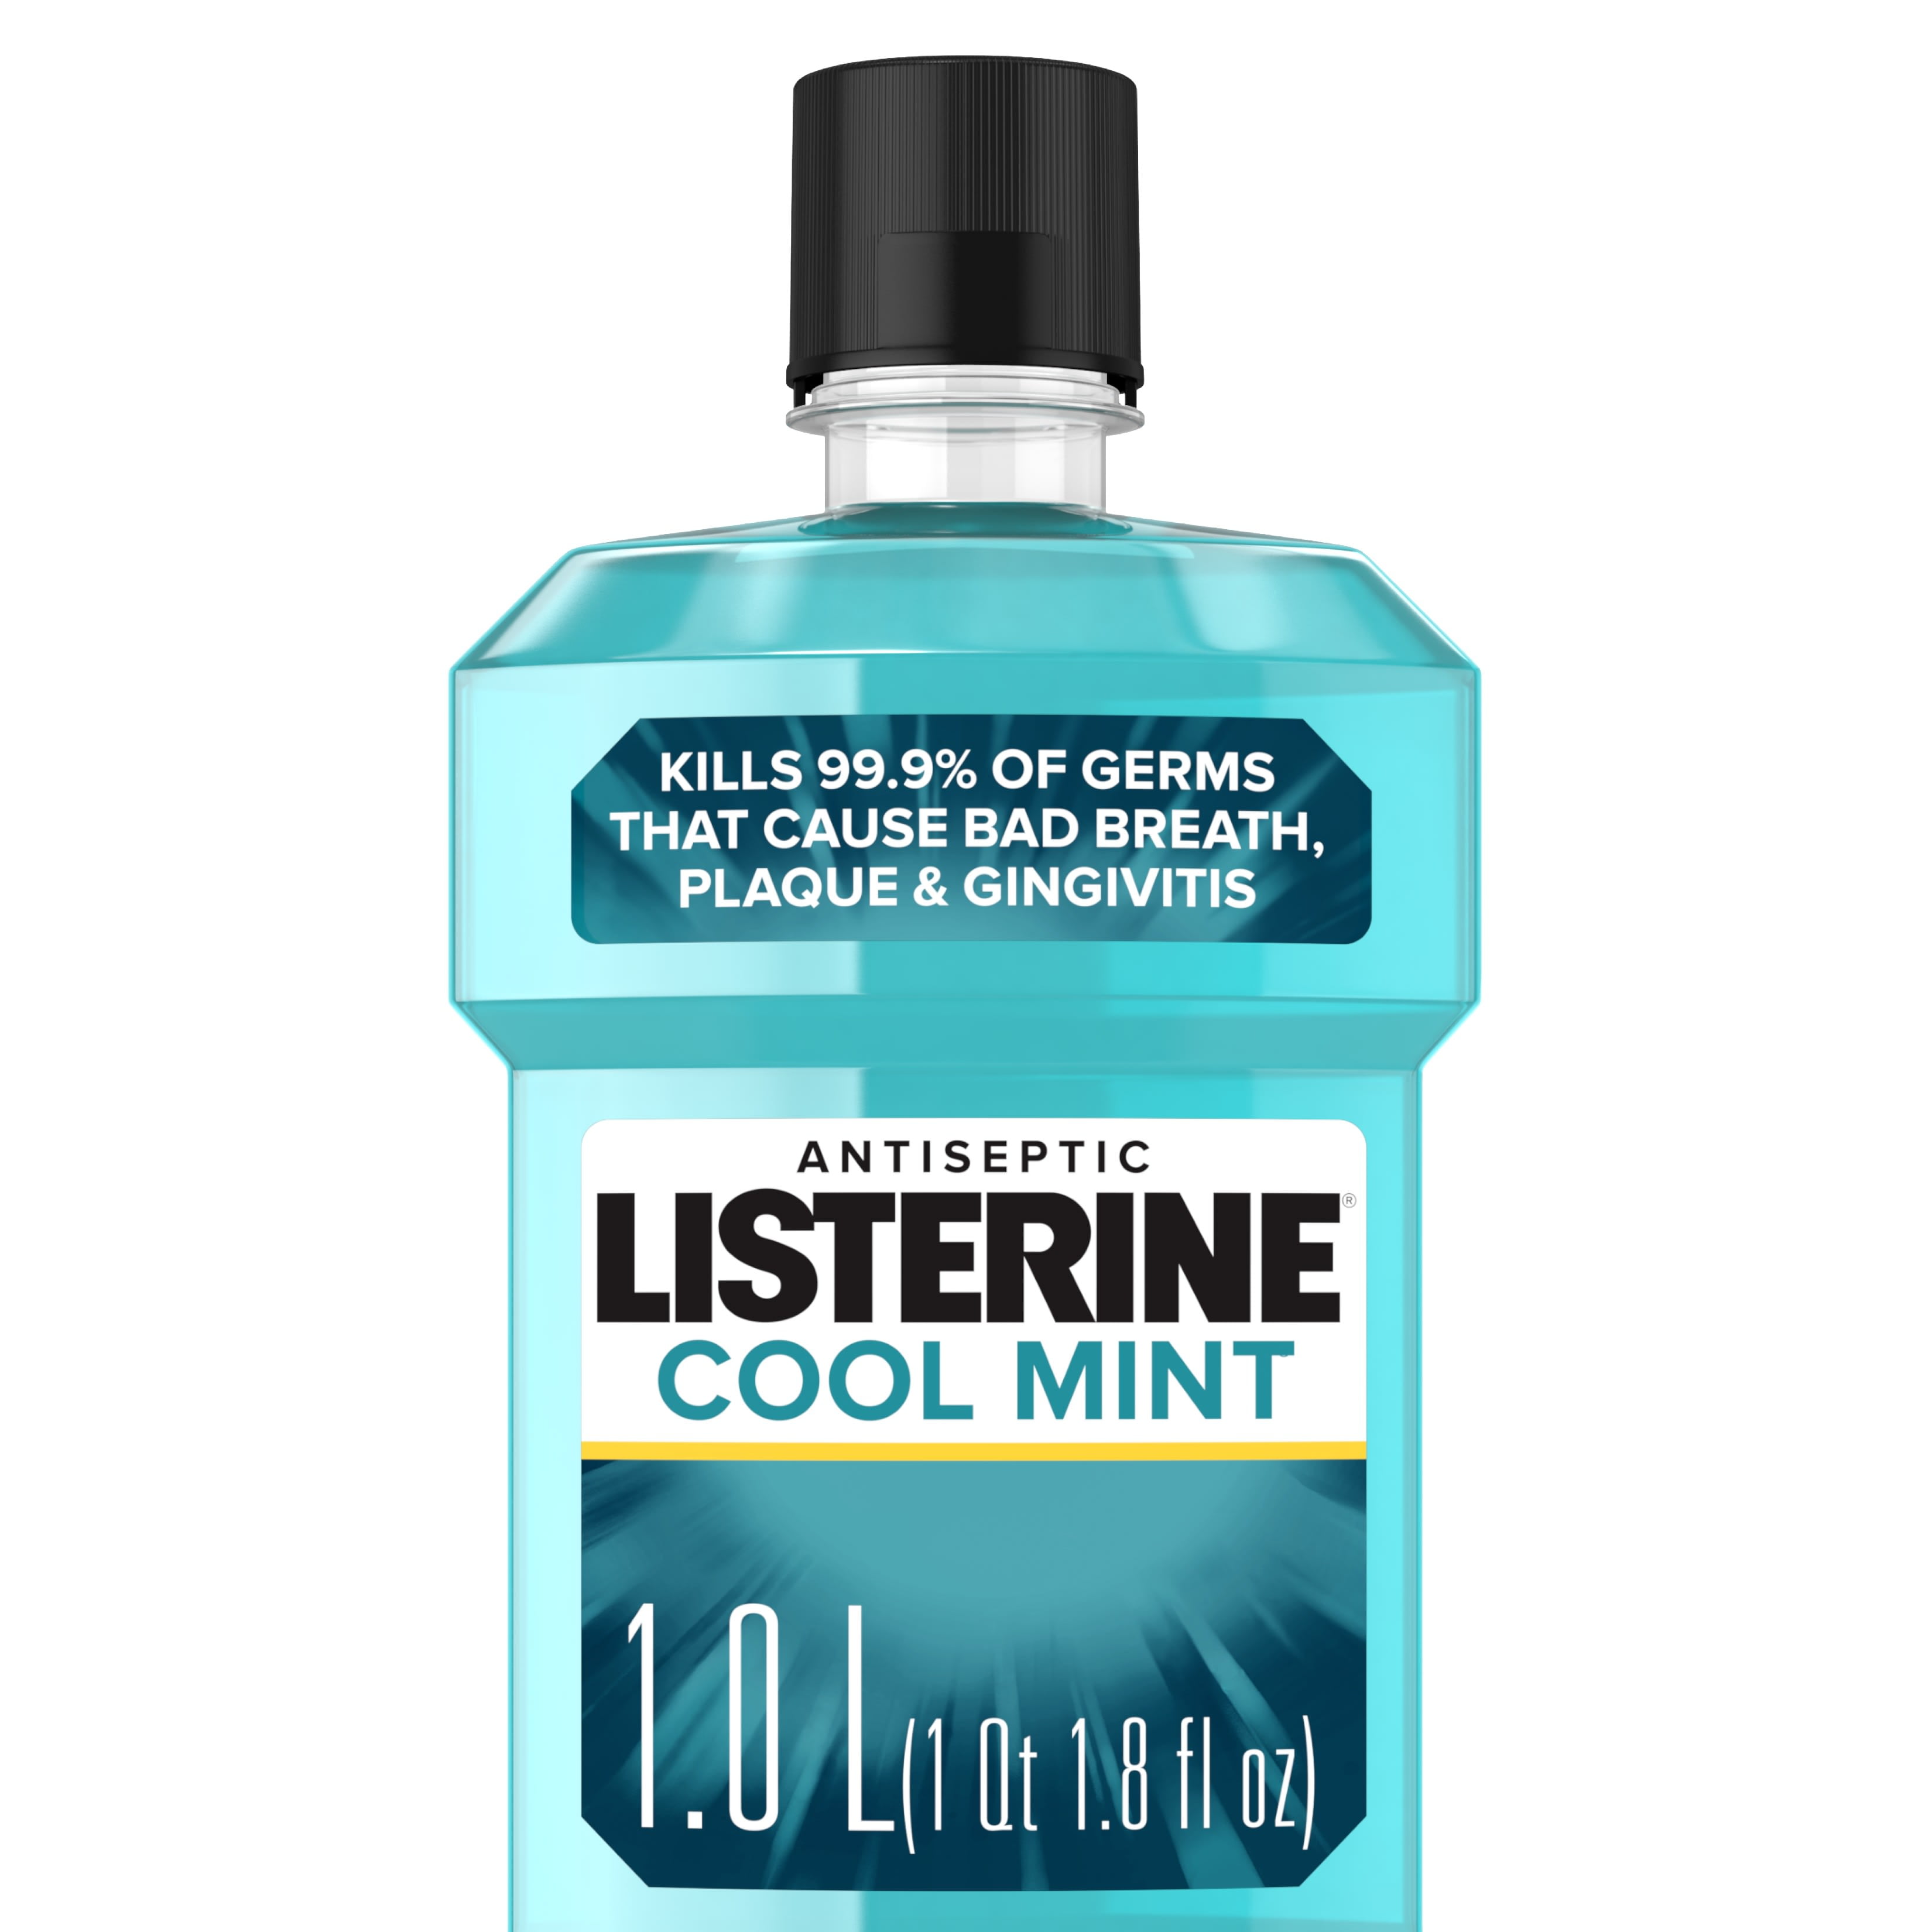 Listerine Cool Mint Antiseptic Mouthwash, Bad Breath & Plaque, 1 L ...